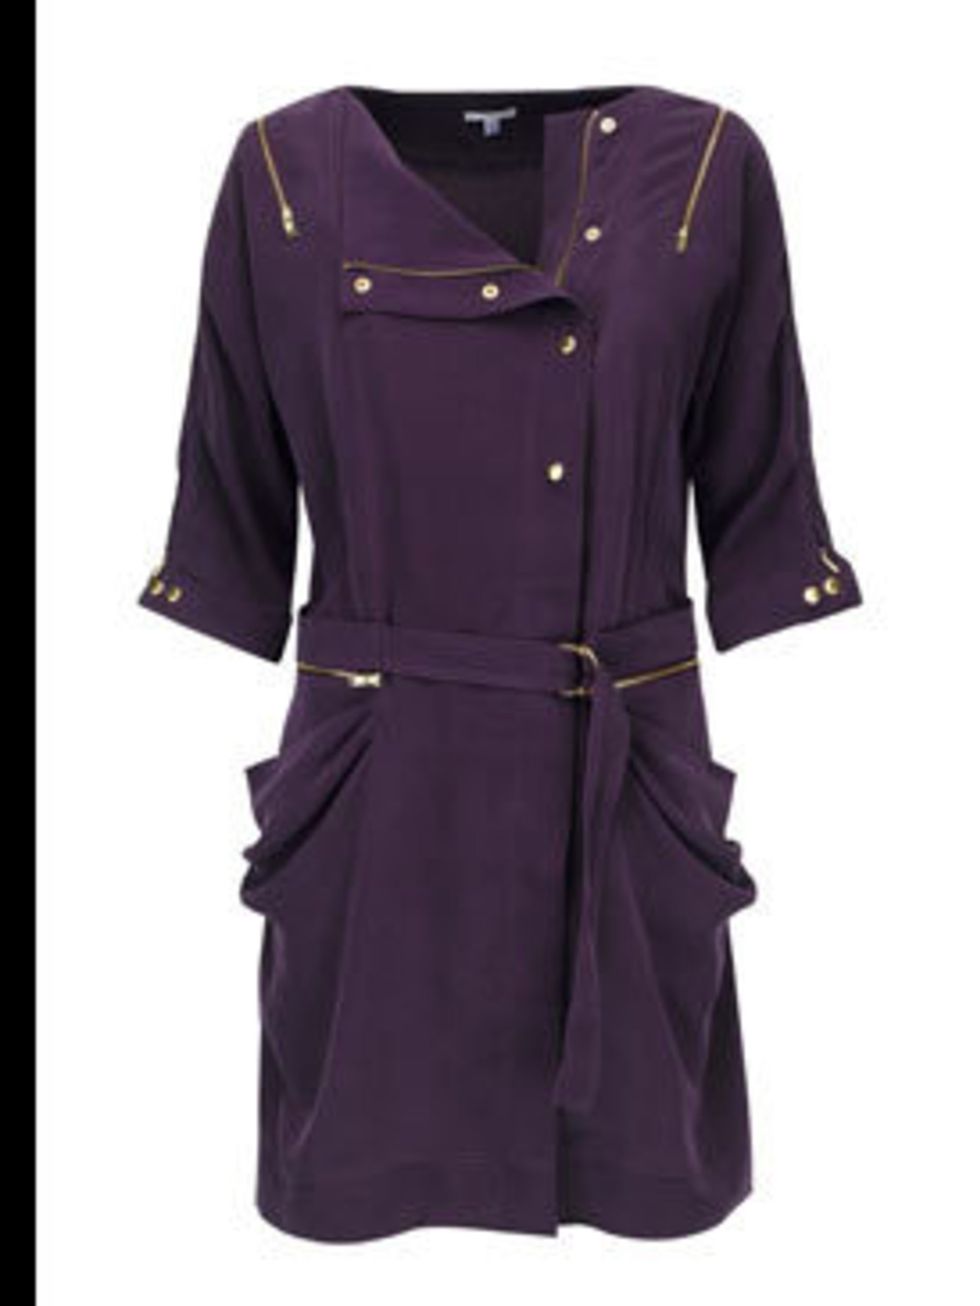 <p>Dress, £59 by Limited Collection at <a href="http://www.marksandspencer.com/gp/node/n/43019030/276-9844037-0594303">Marks &amp; Spencer</a></p>